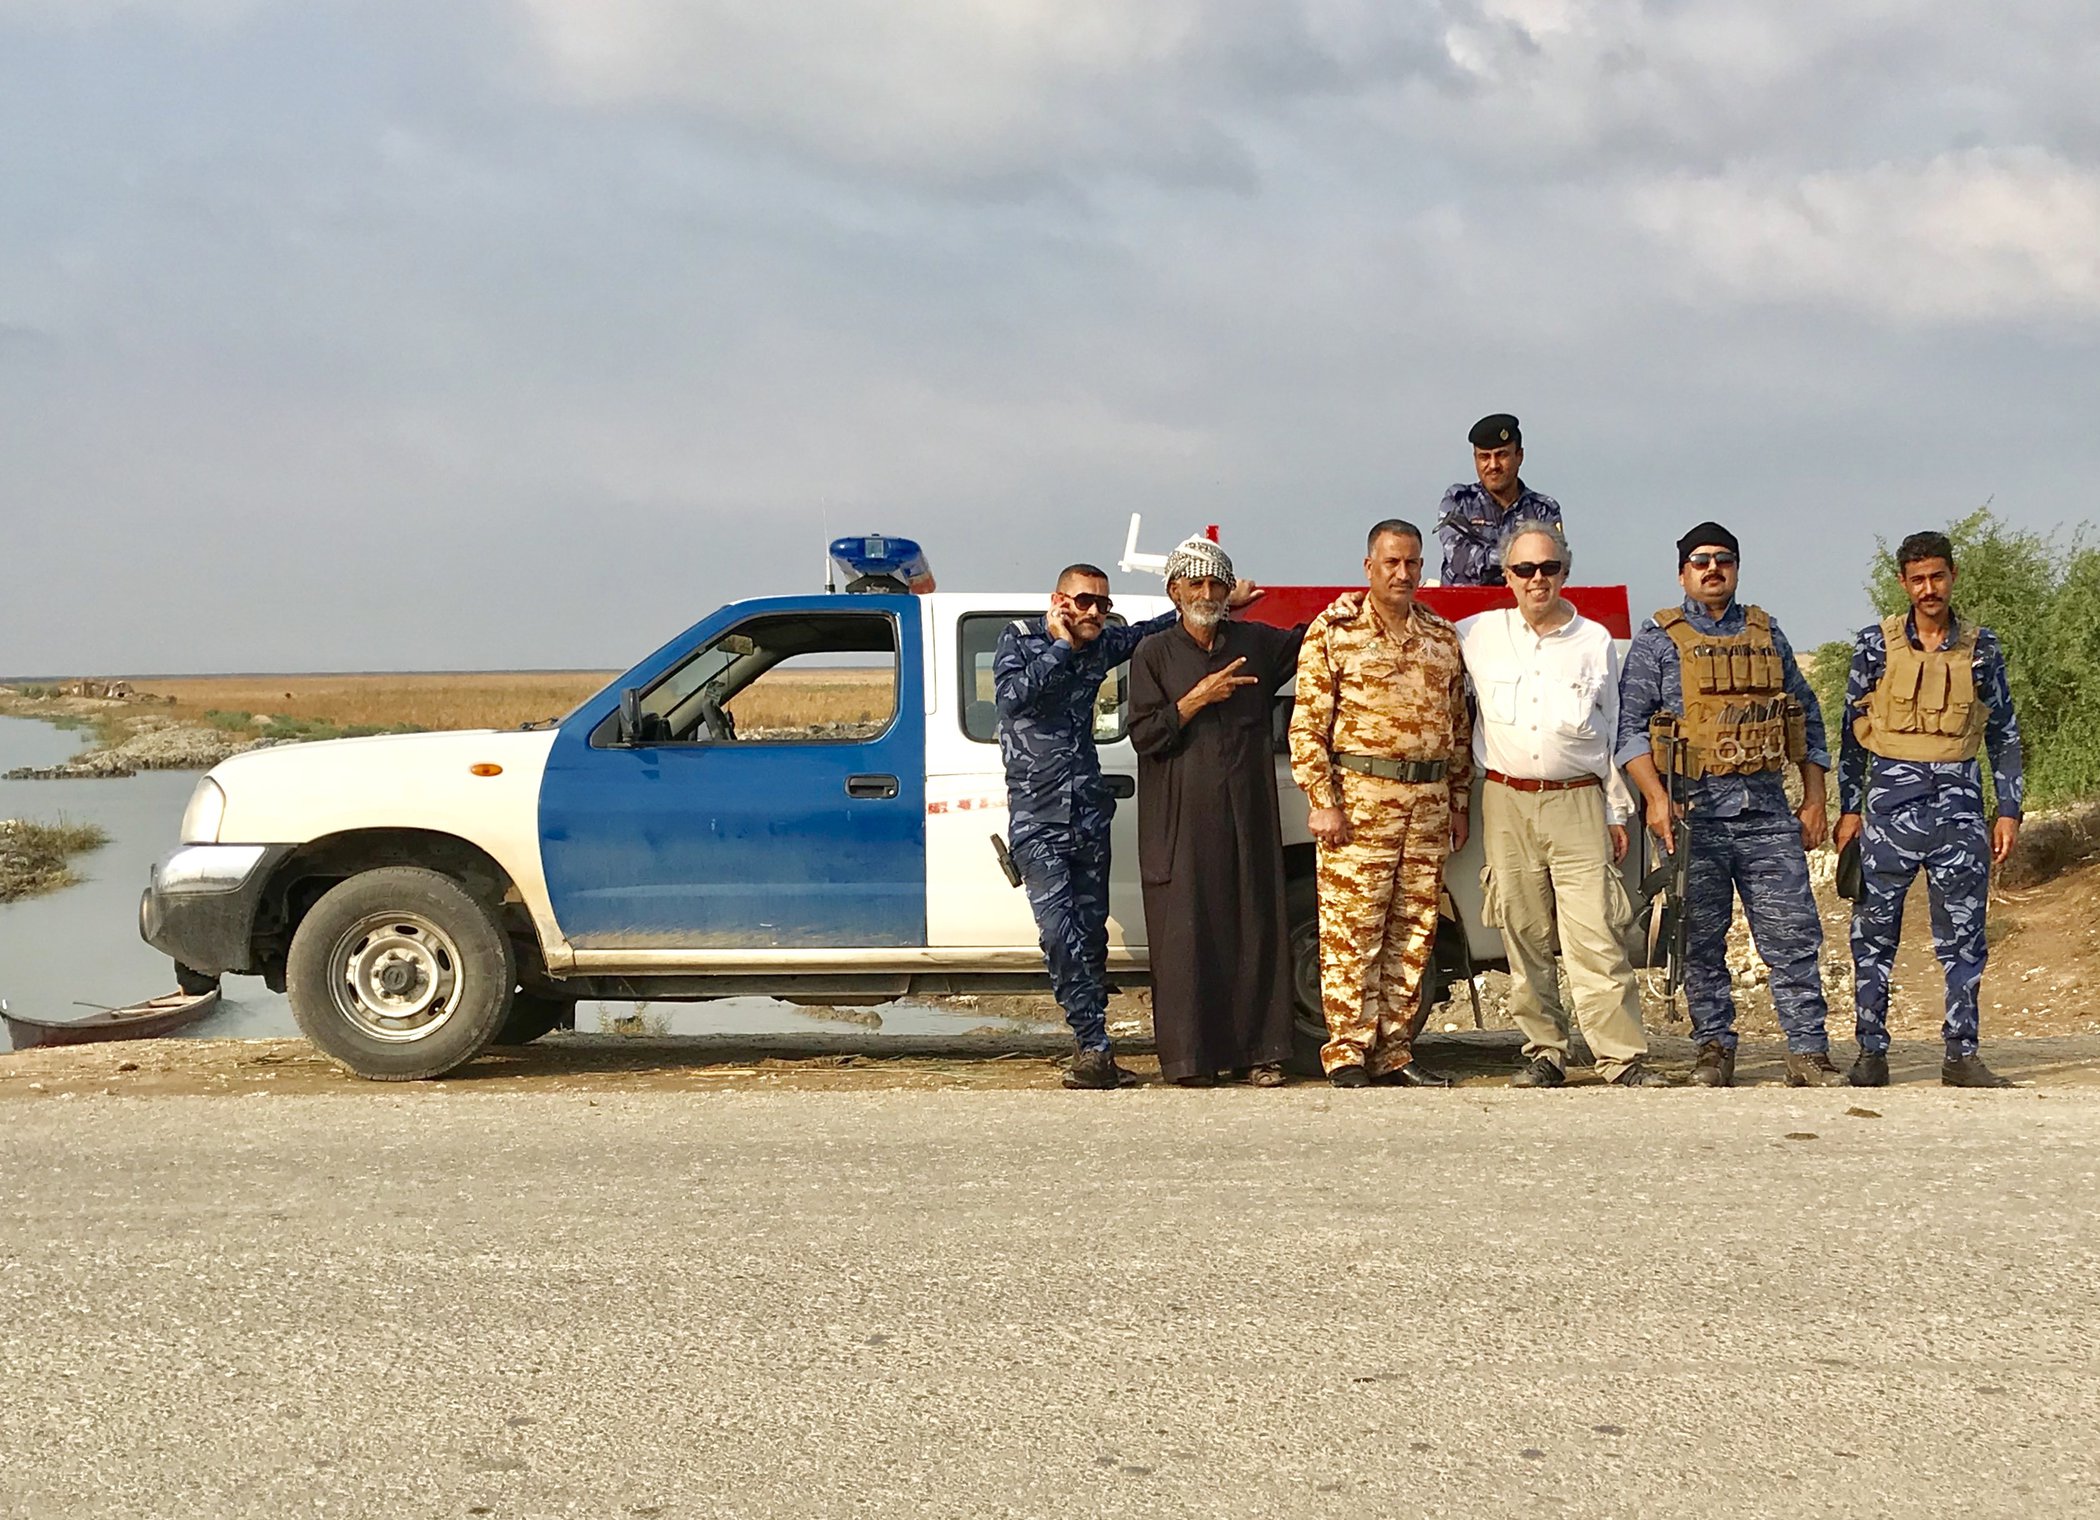 Reisleider Meir Behar in Zuid-Irak, 2018